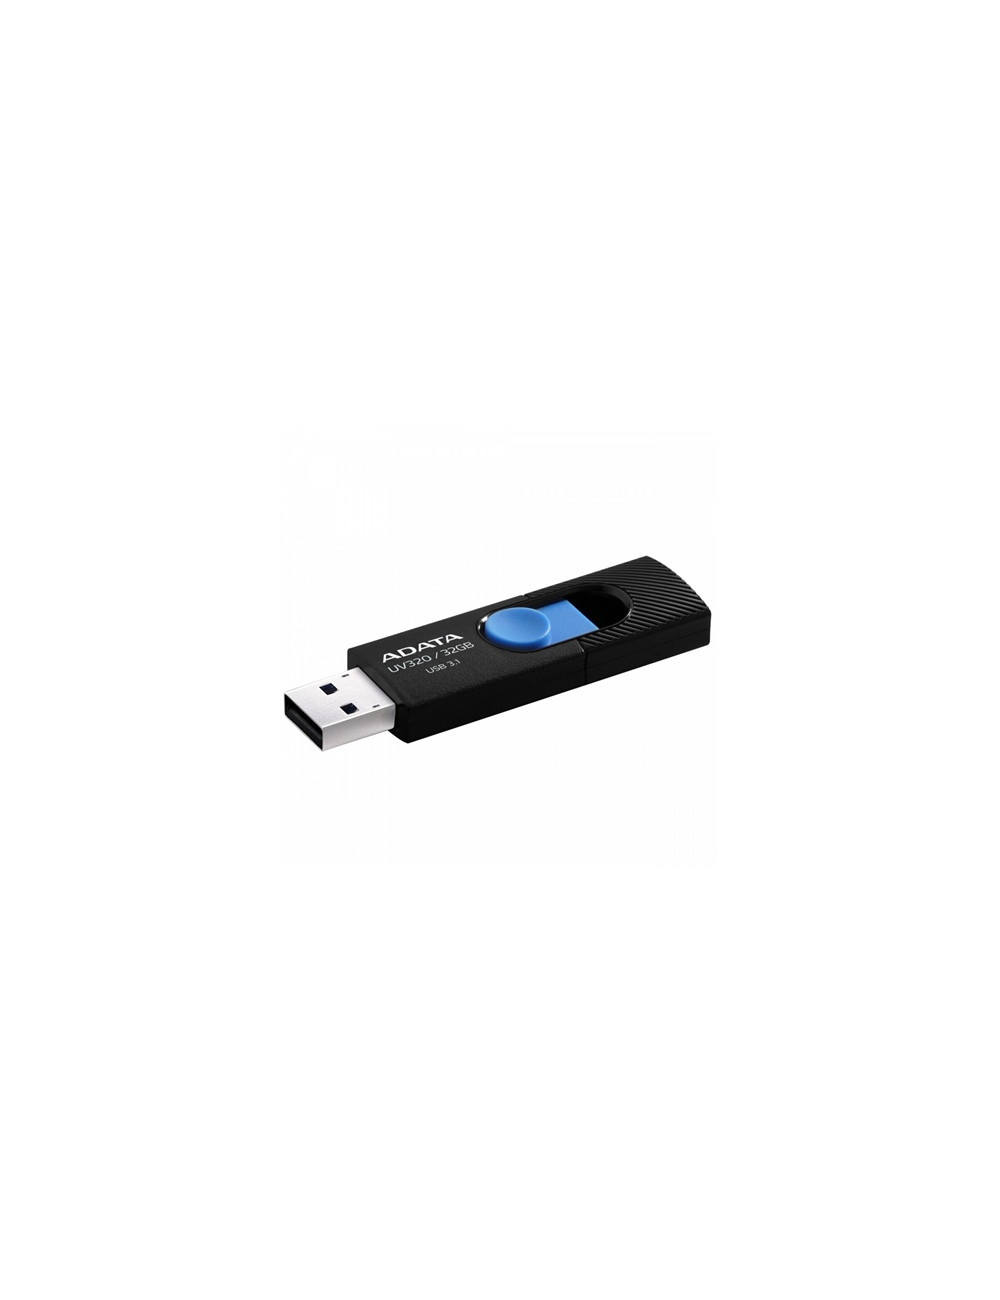 ADATA UV320 32 GB, USB 3.1, Black/Blue